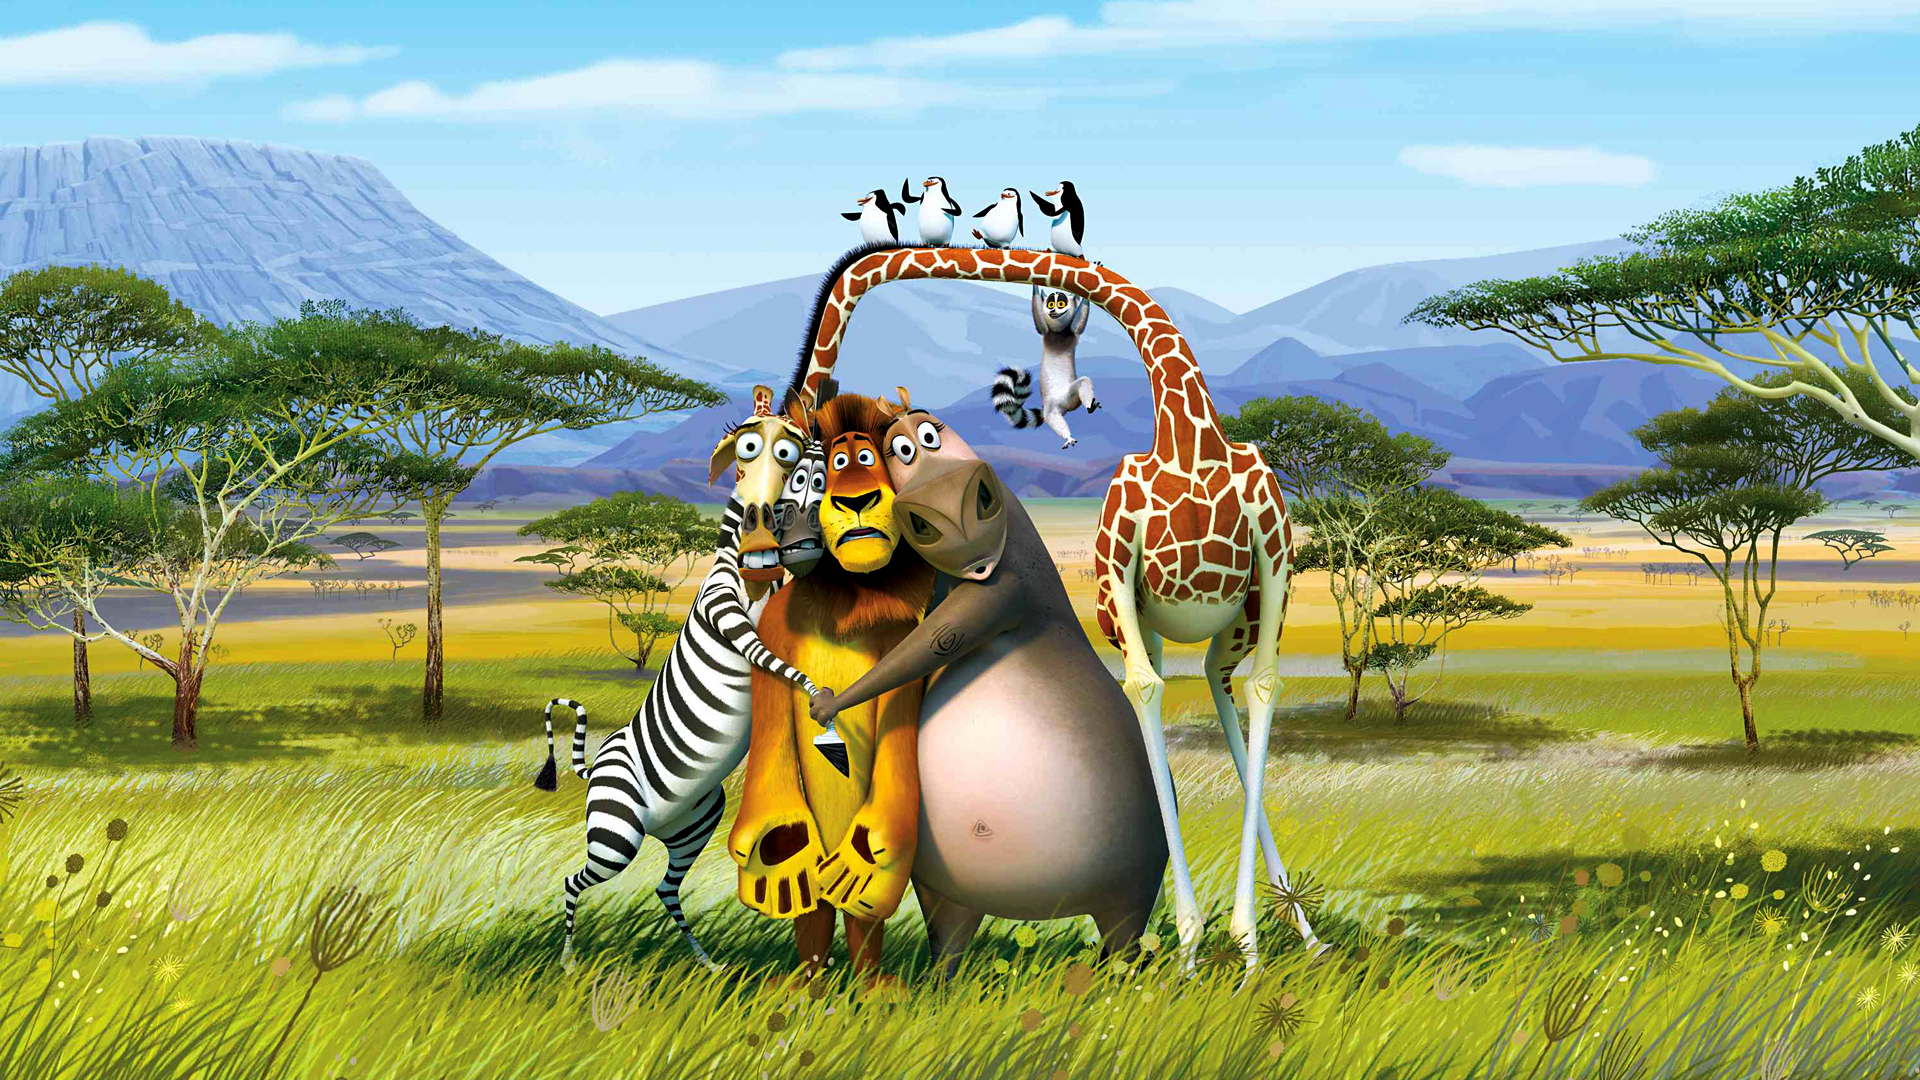 Madagascar Wallpaper